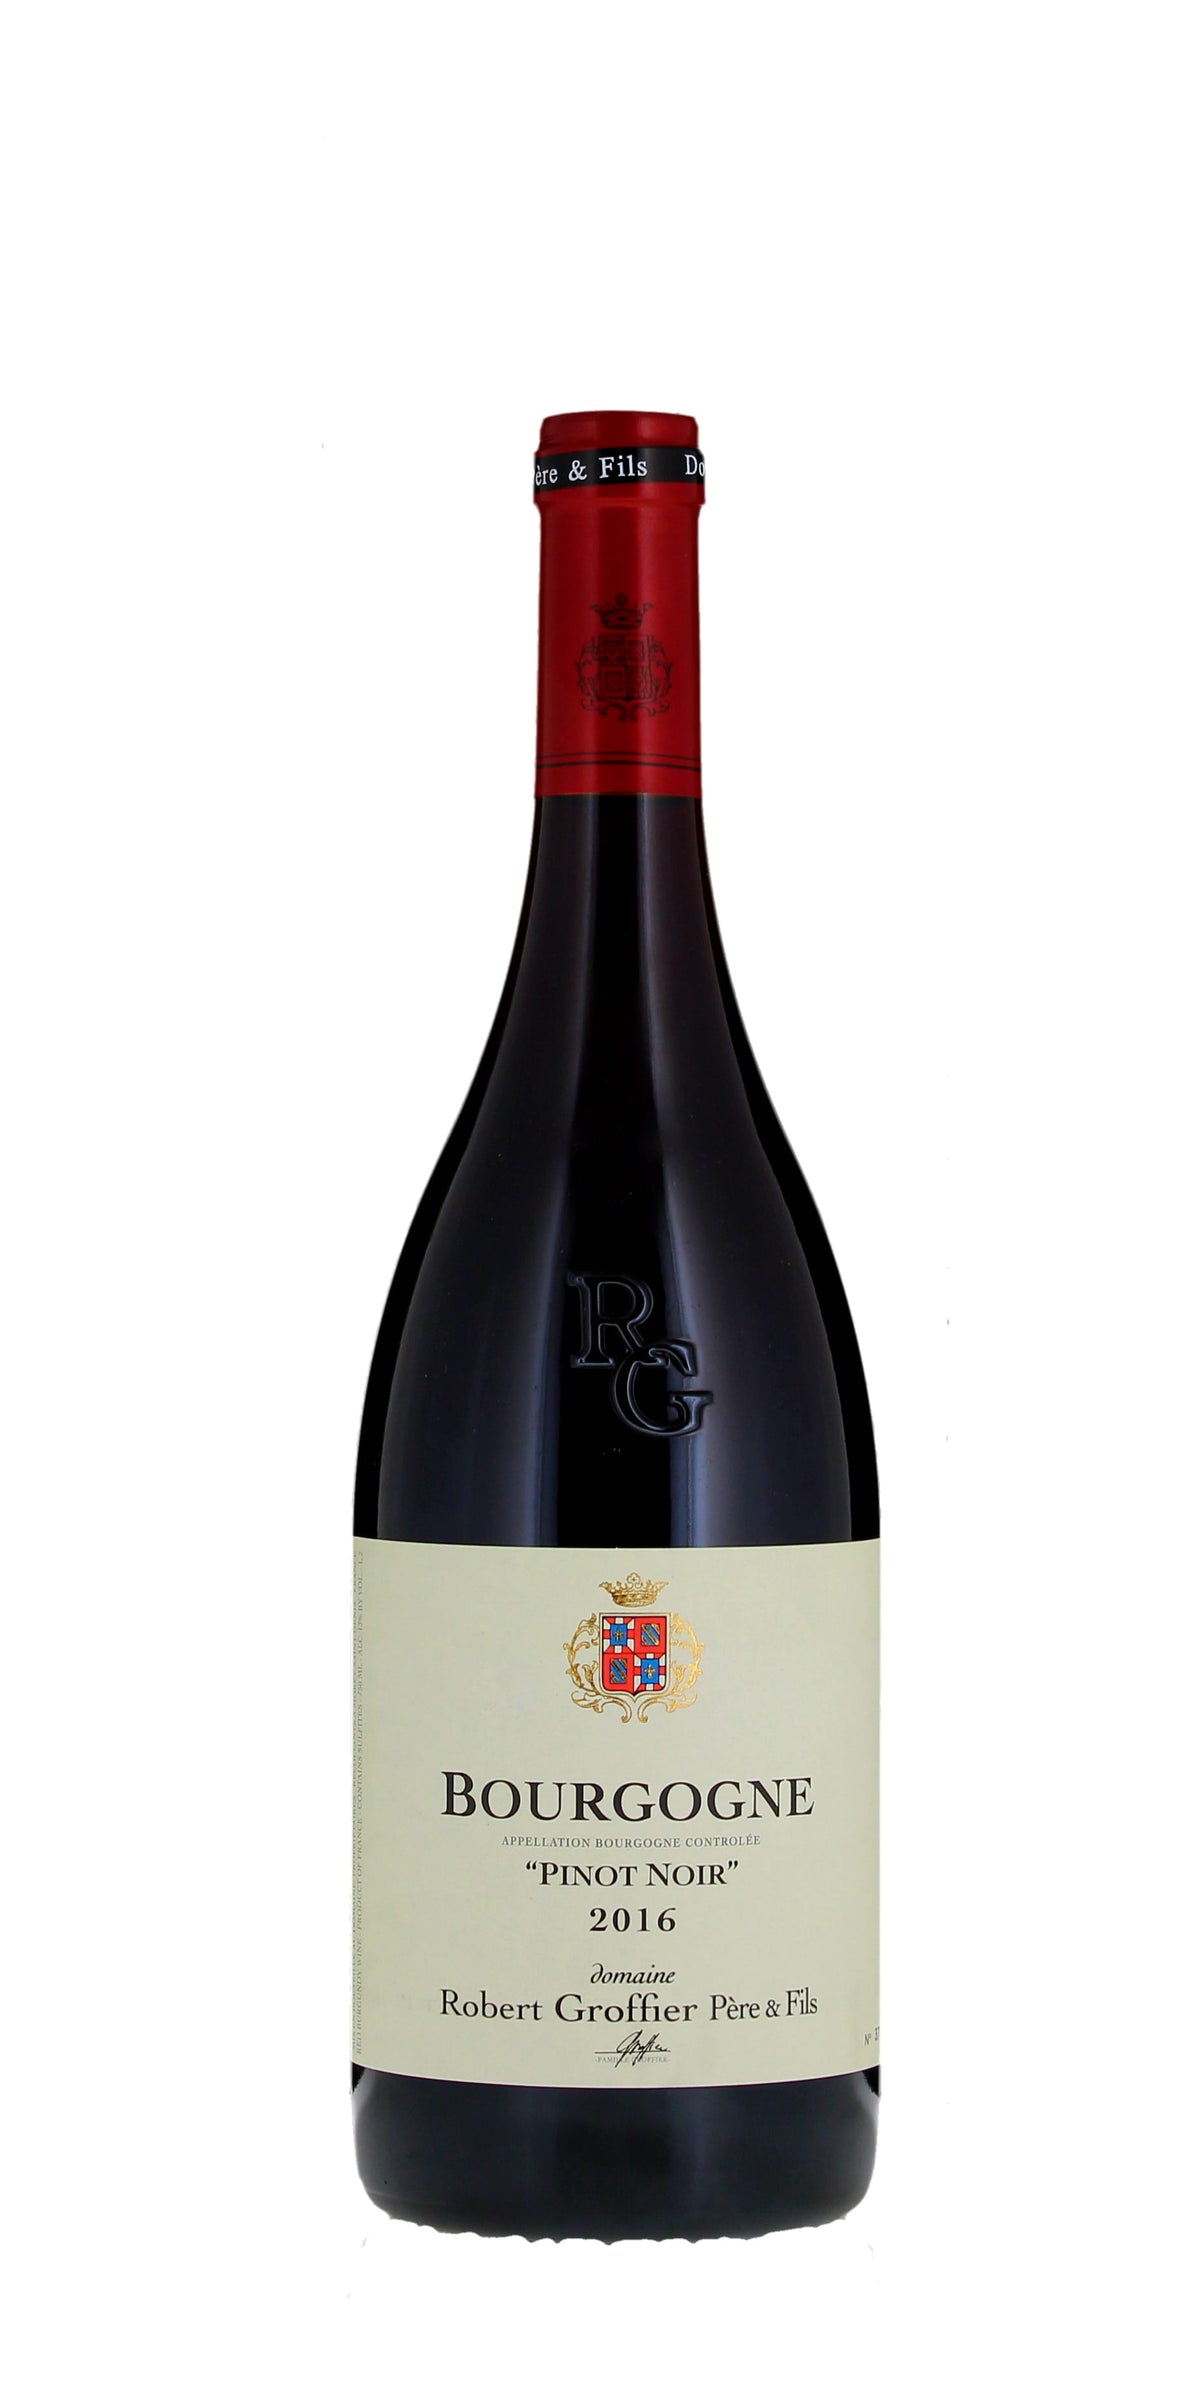 Robert Groffier Bourgogne, "Pinot Noir", Burgundy 2016